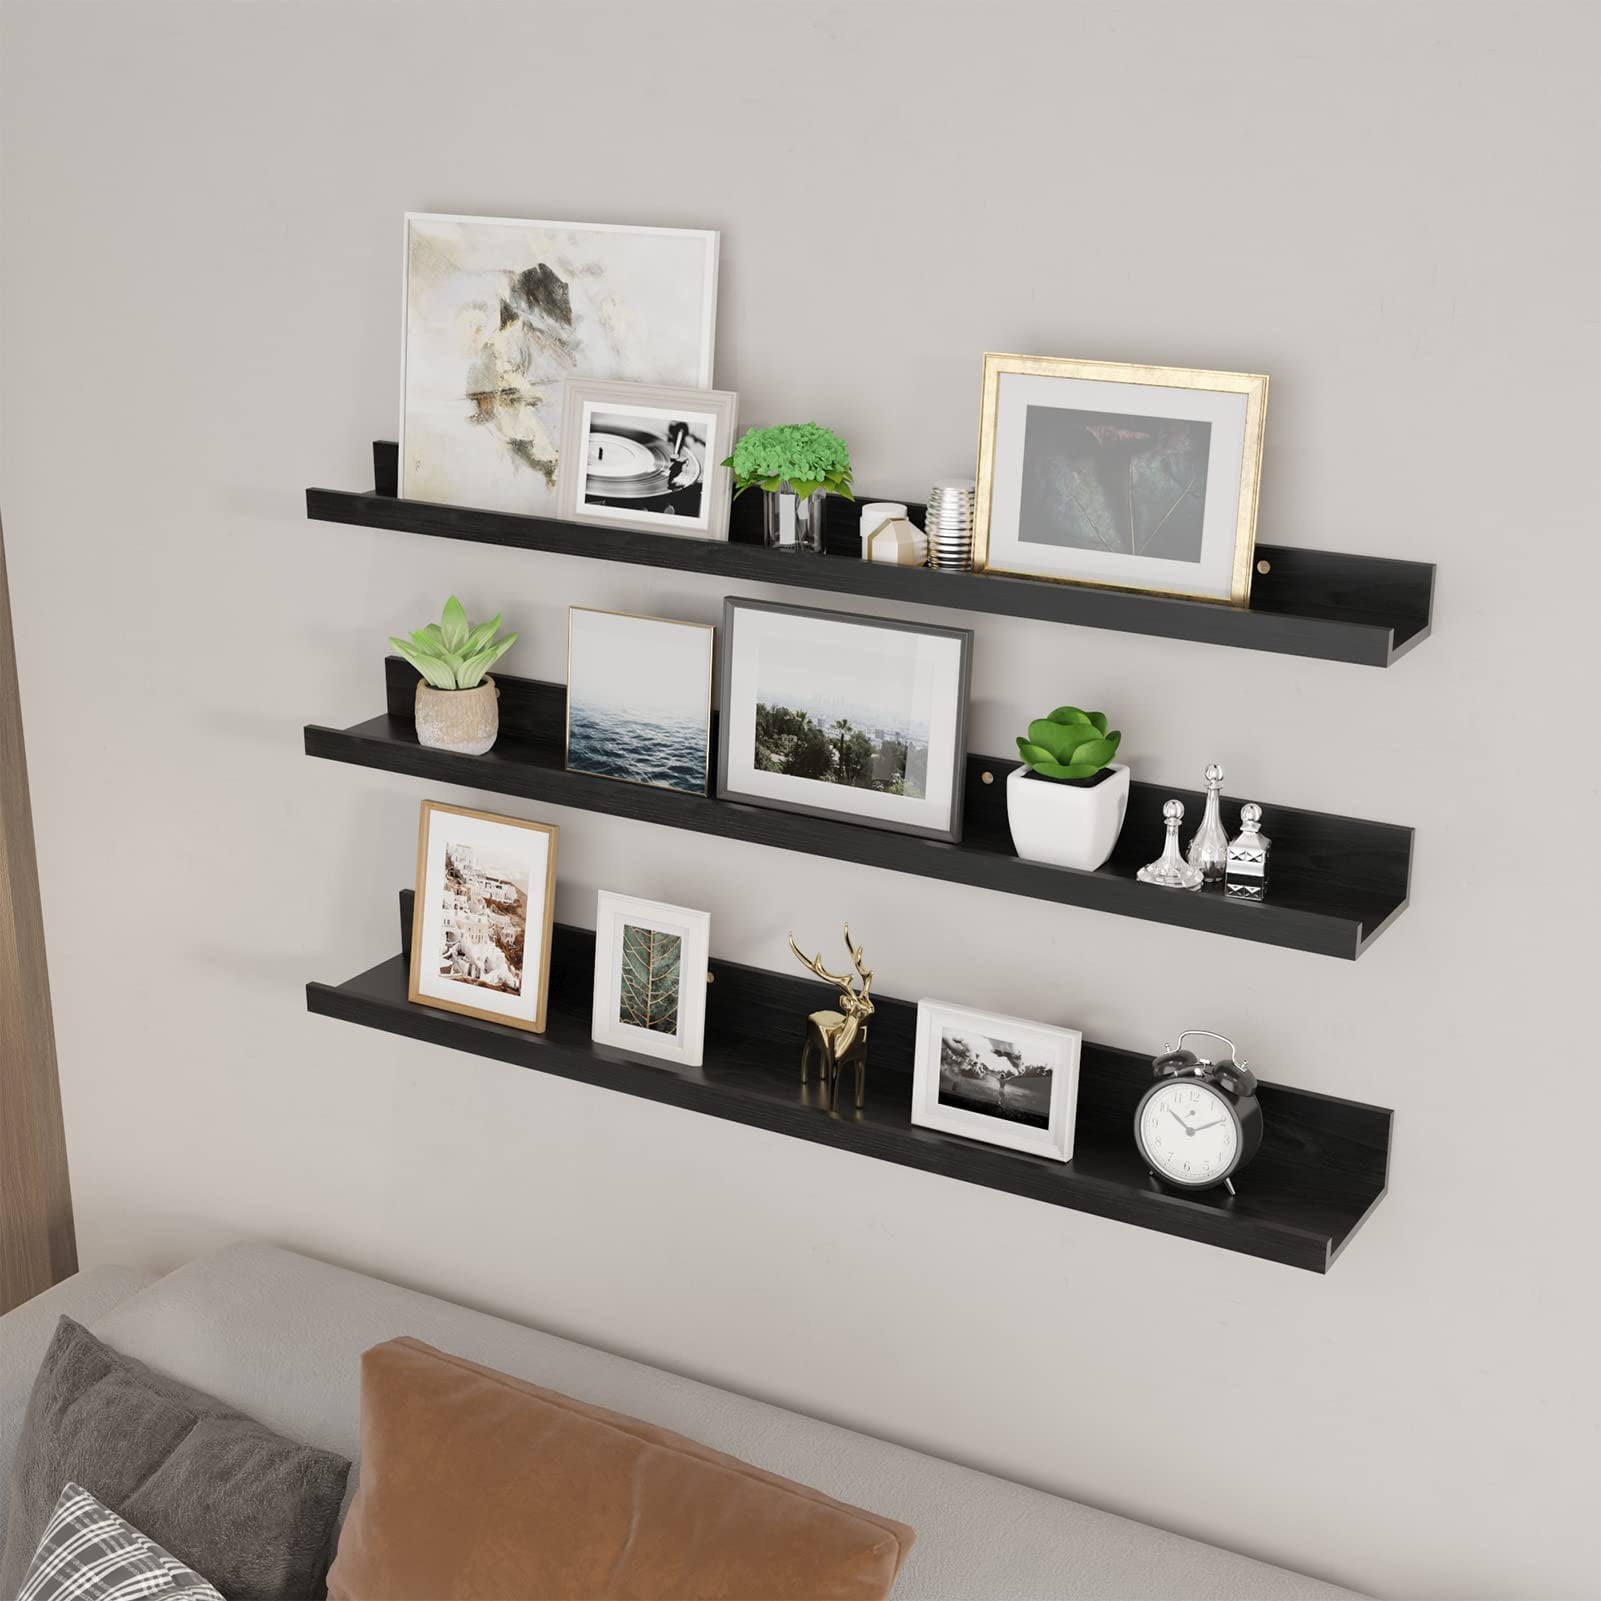 24 inch Black Floating Shelves for Wall Decor Ledge Set of 3 Wall Mount Floating Shelf for Living Room, Bedroom, Office, Size: Large:24X3.95X2; Medium